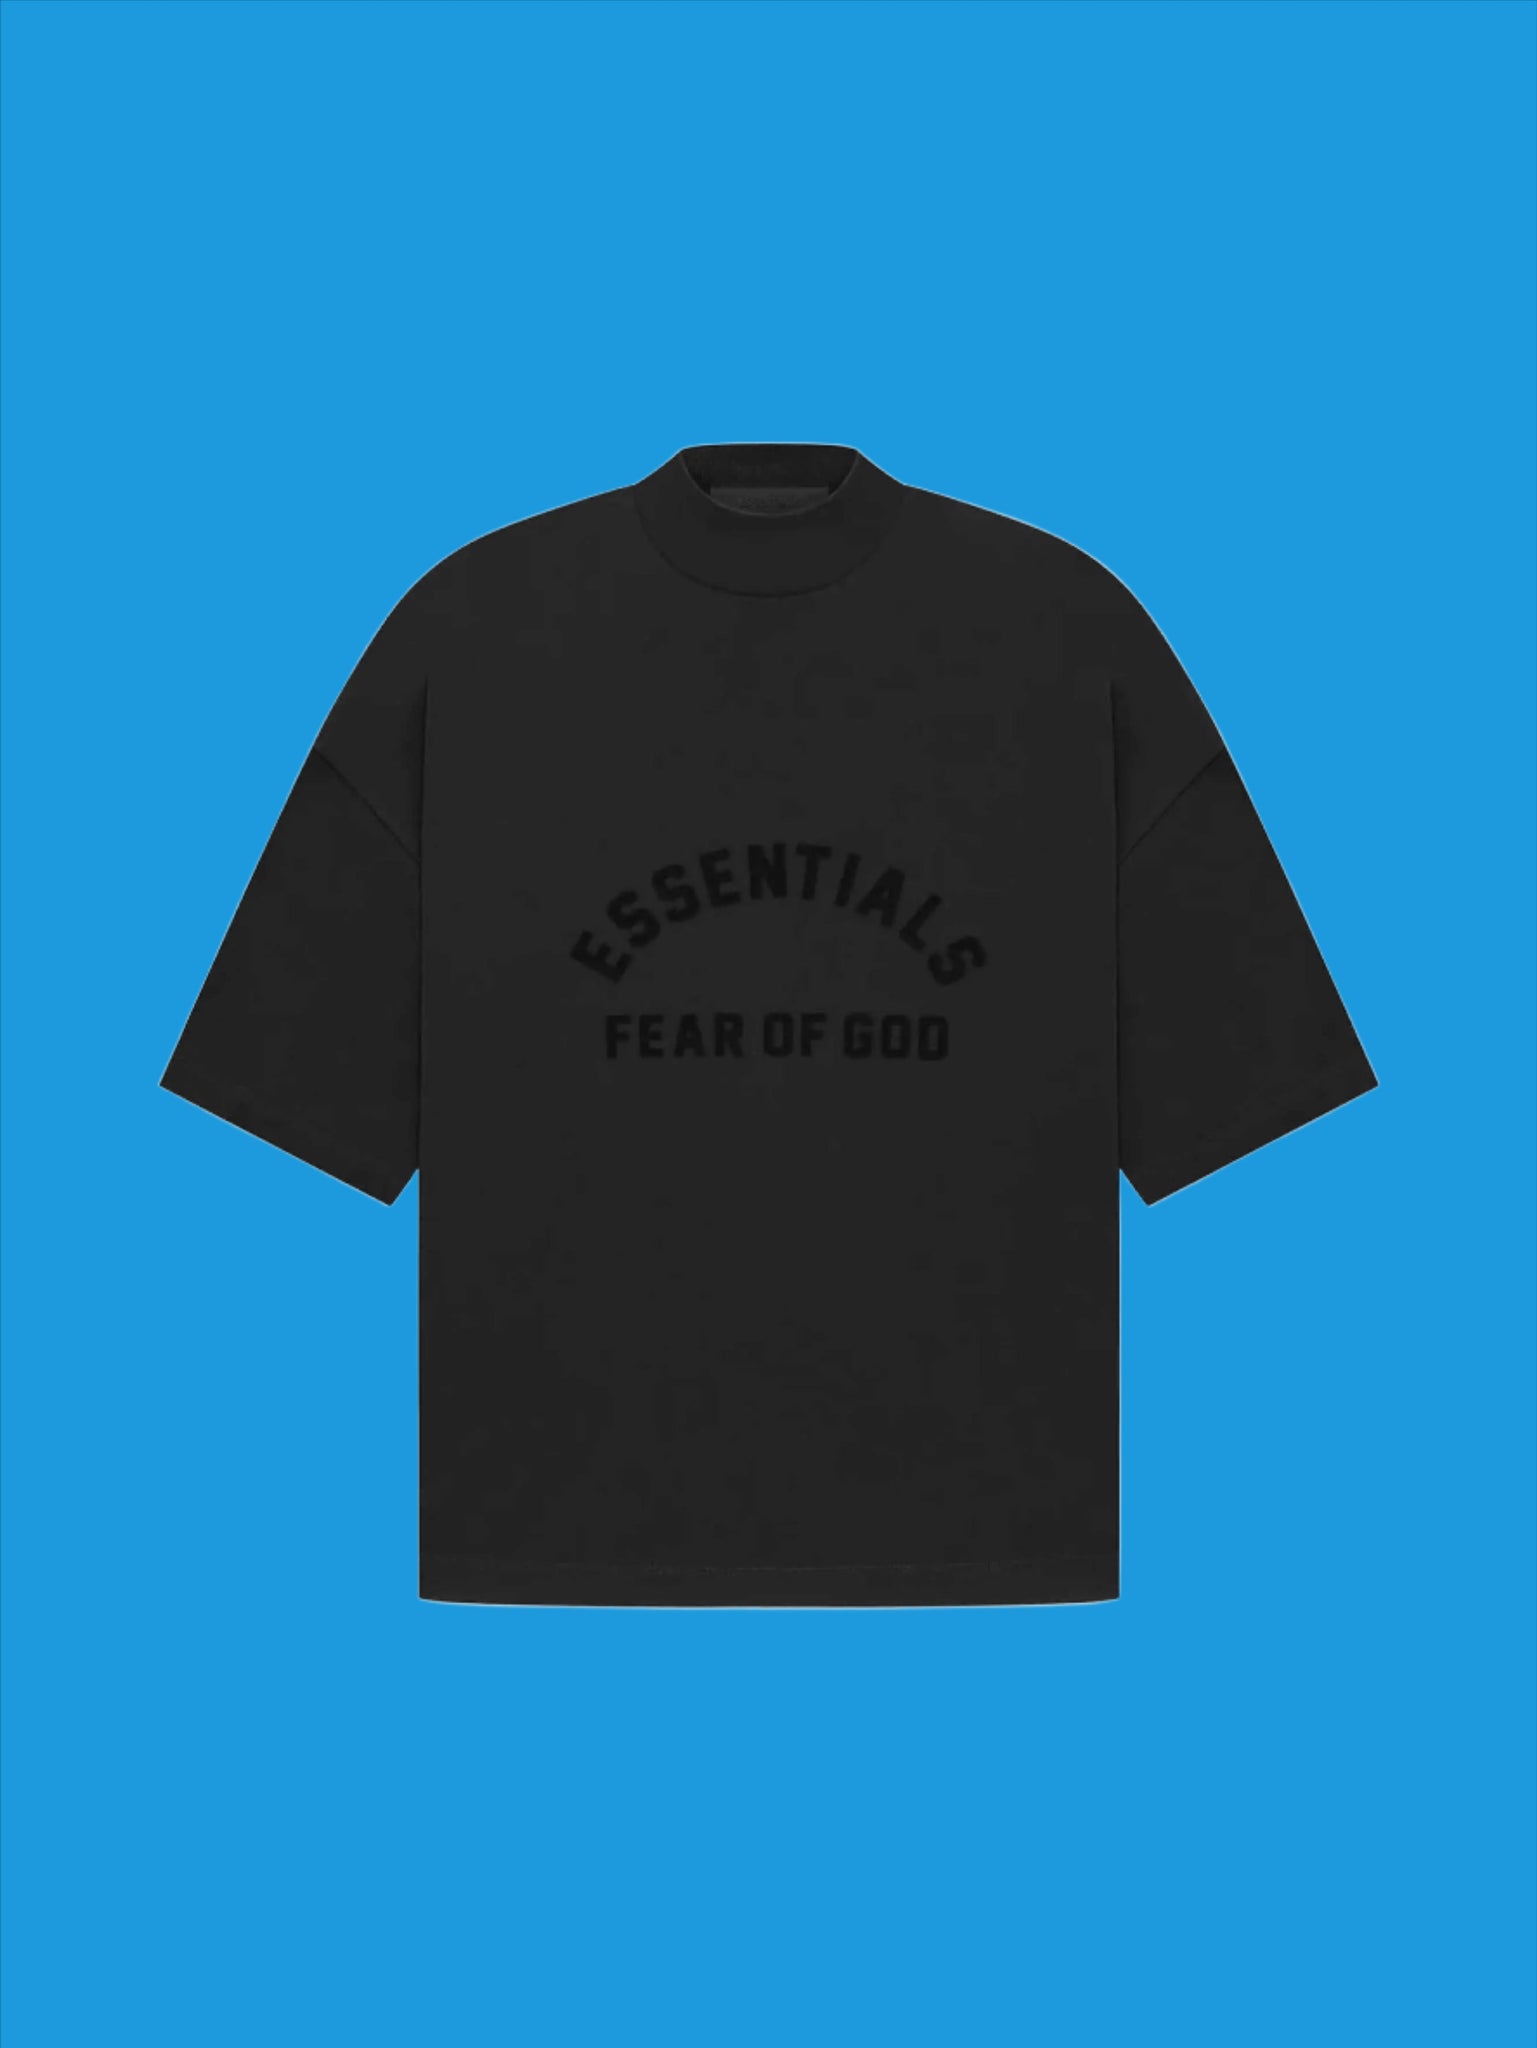 Fear of God Essentials T-shirt Jet Black - Prior